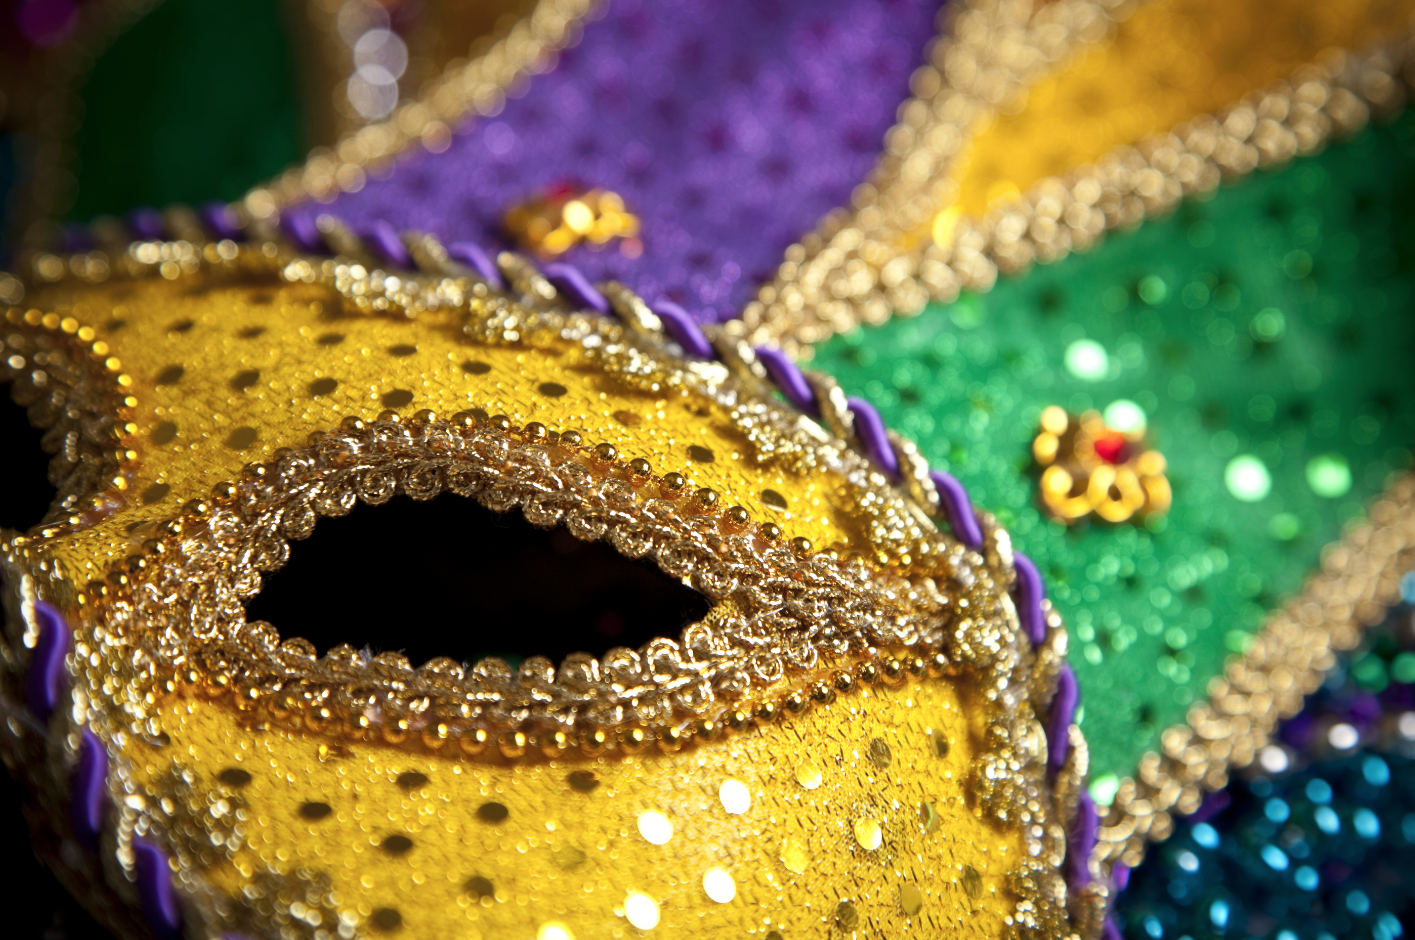 7 Sinfully Fun Ways to Celebrate Mardi Gras 2015 in Washington, D.C.